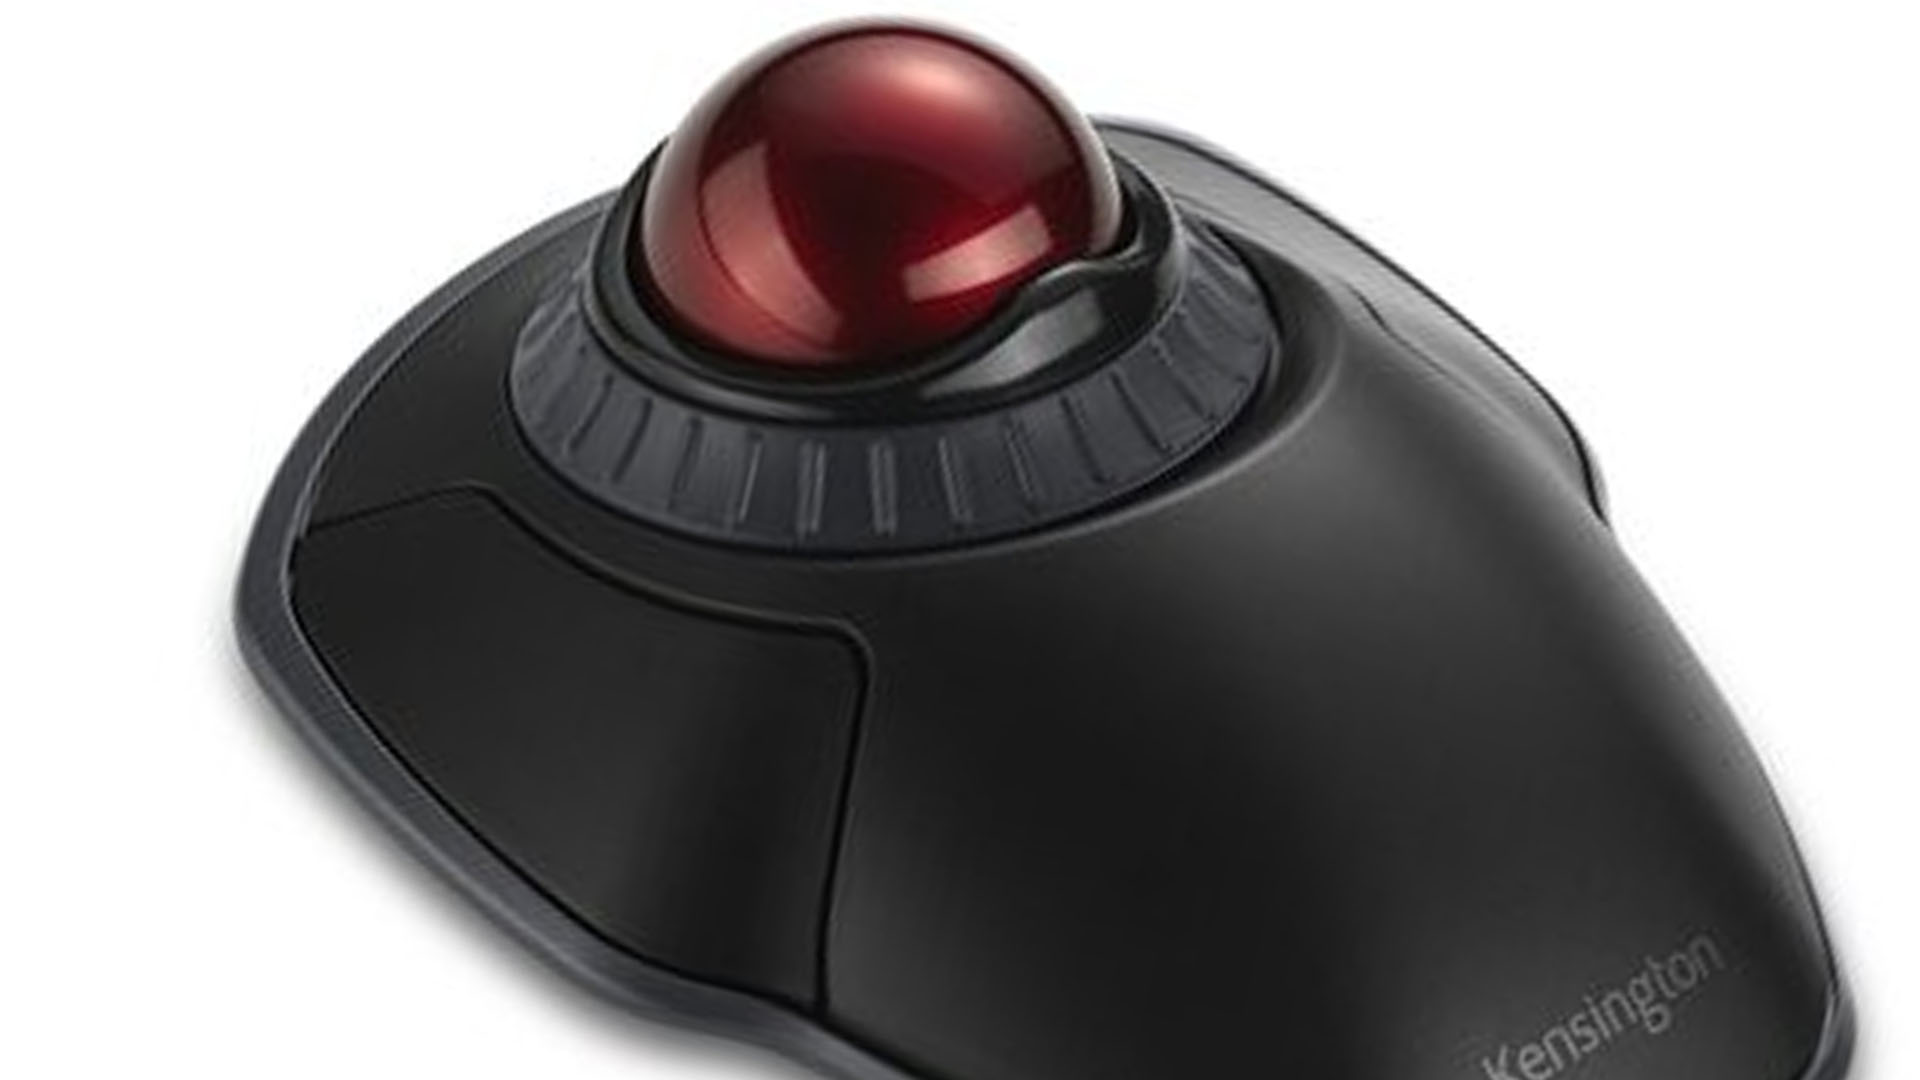 Kensington Expert Mouse Wireless Trackball Review